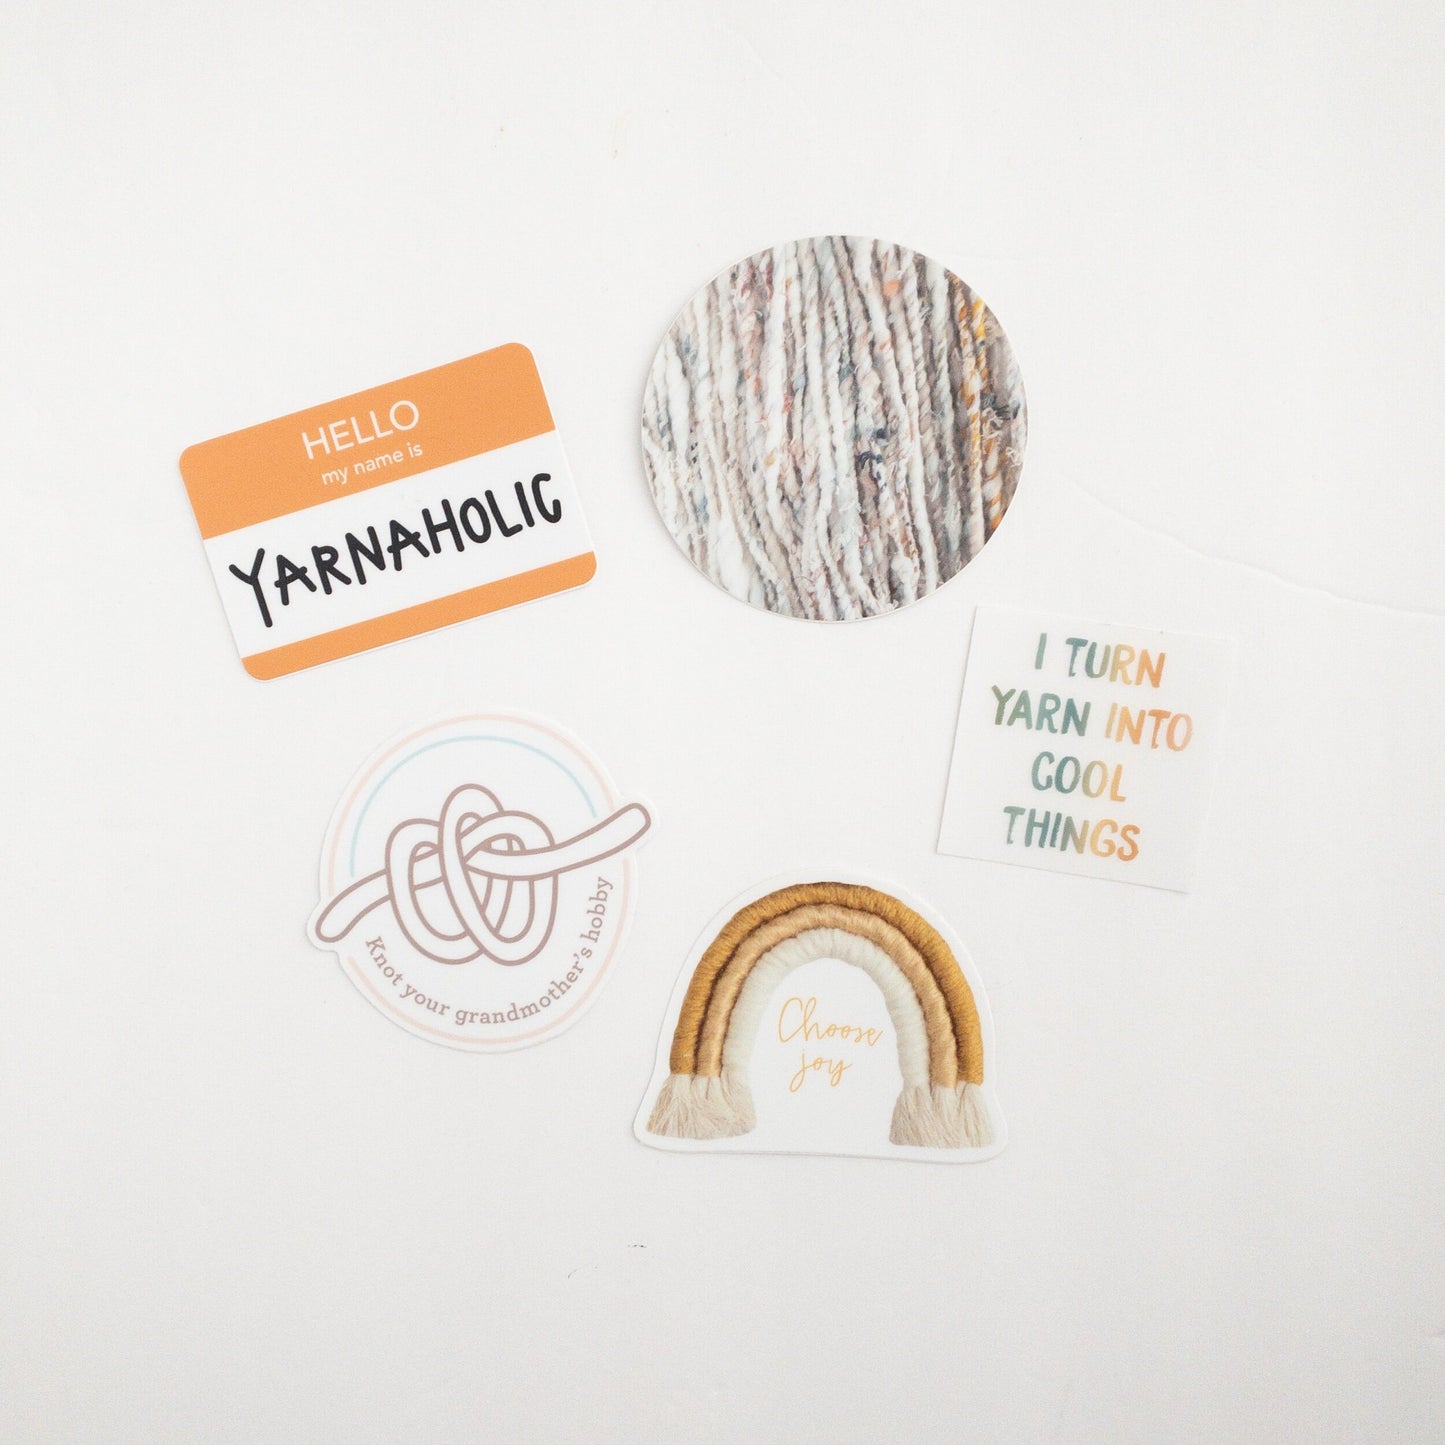 Vinyl Sticker: I turn yarn into cool things